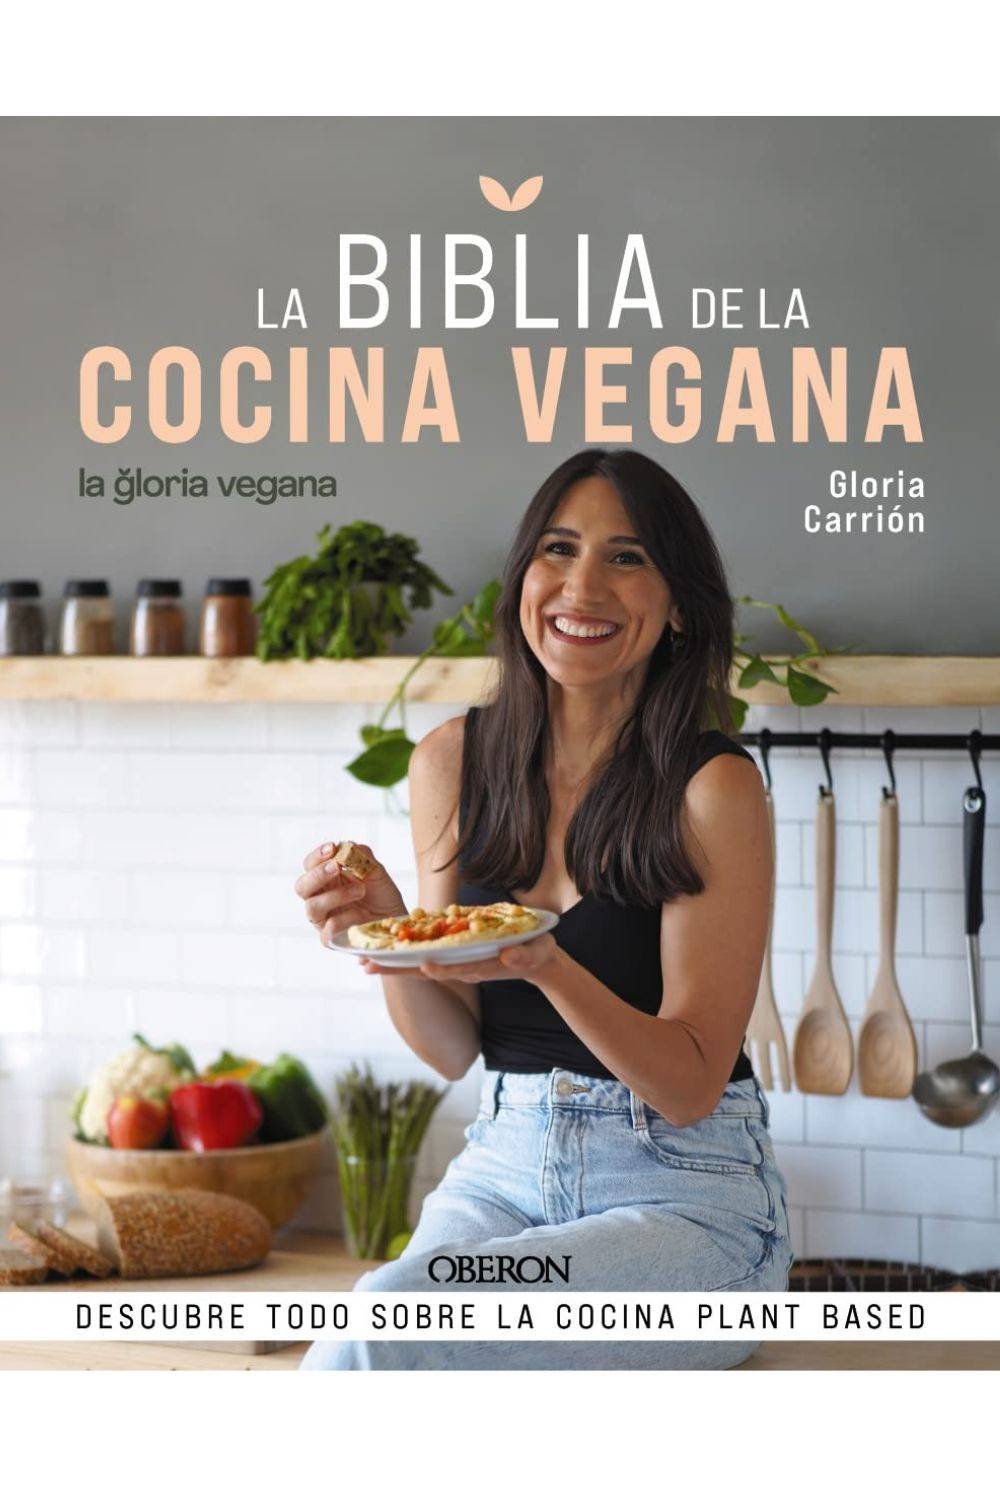 Libros prácticos: ‘La biblia vegana’ de Gloria Carrión